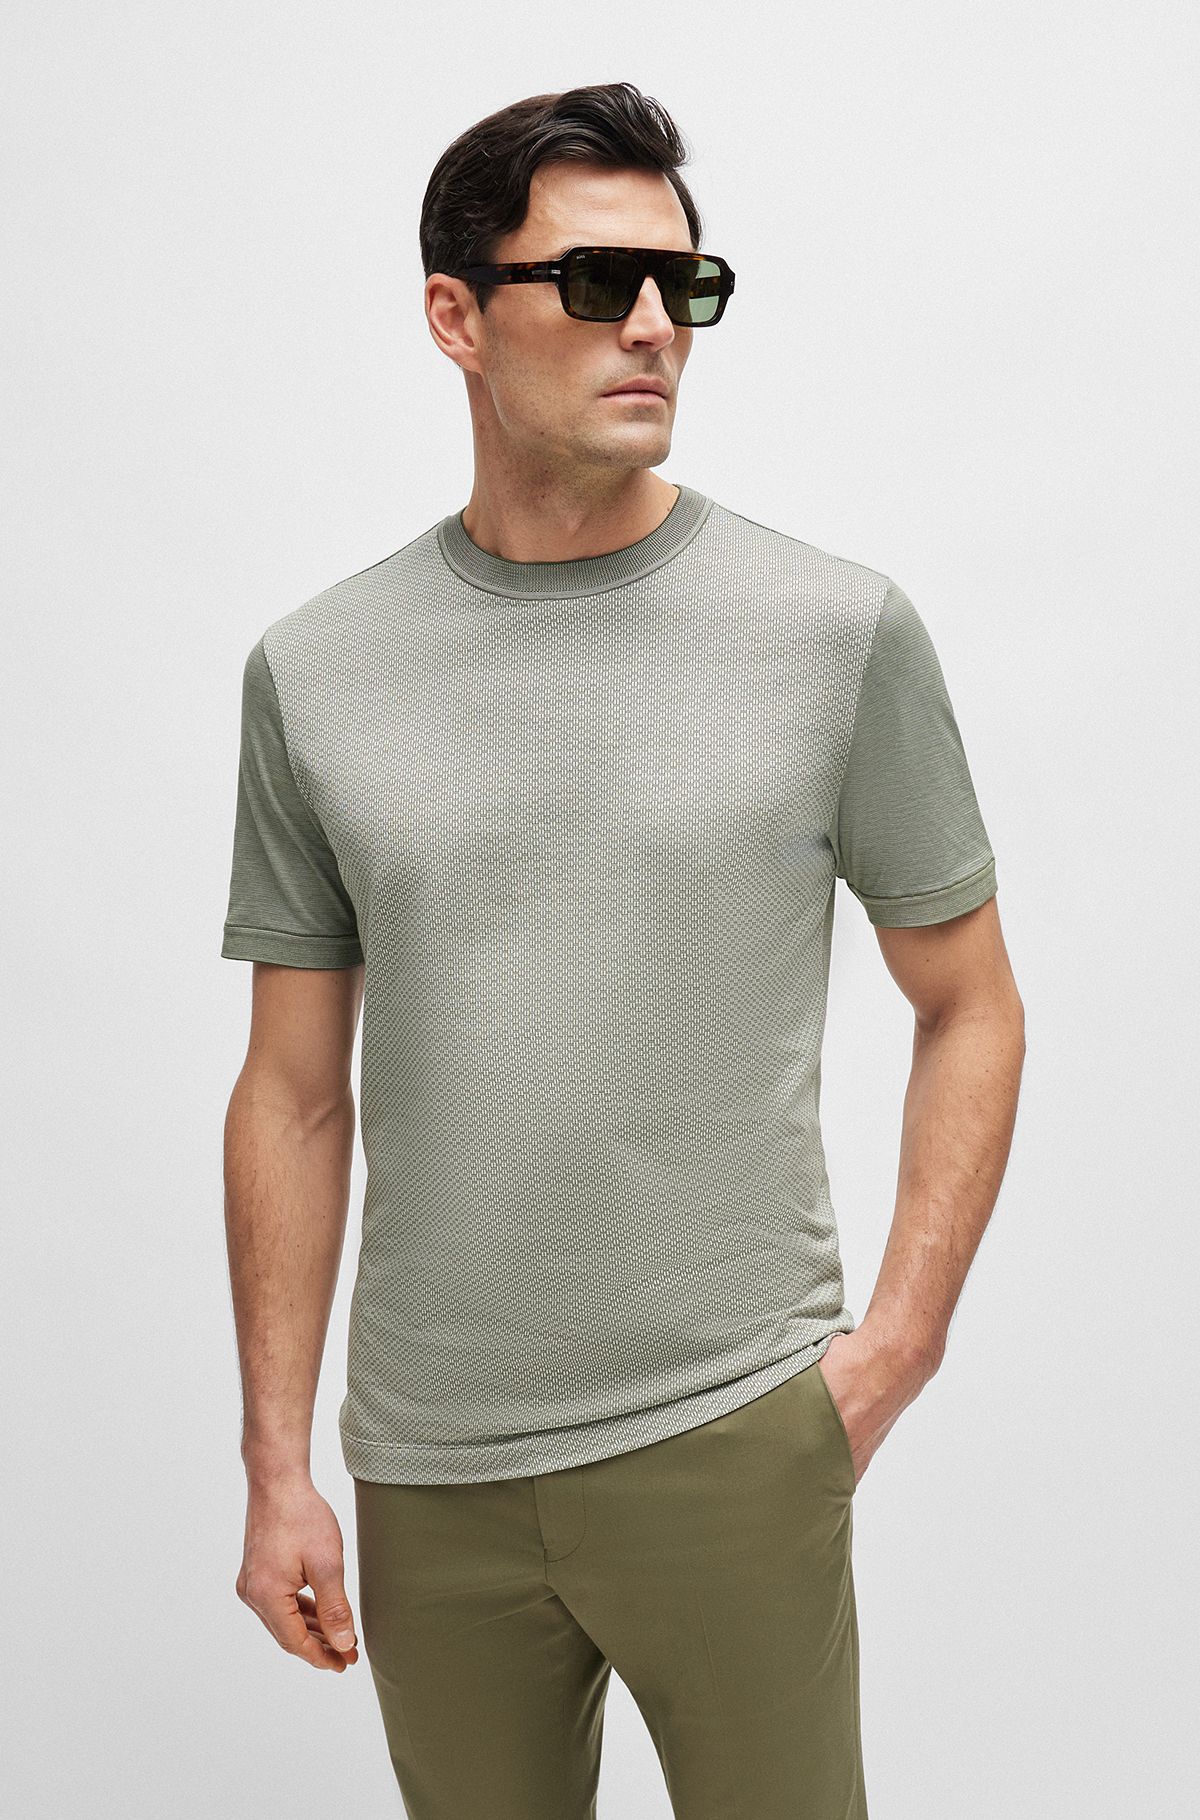 by for T-Shirts Men Stylish Men BOSS BOSS Green | HUGO